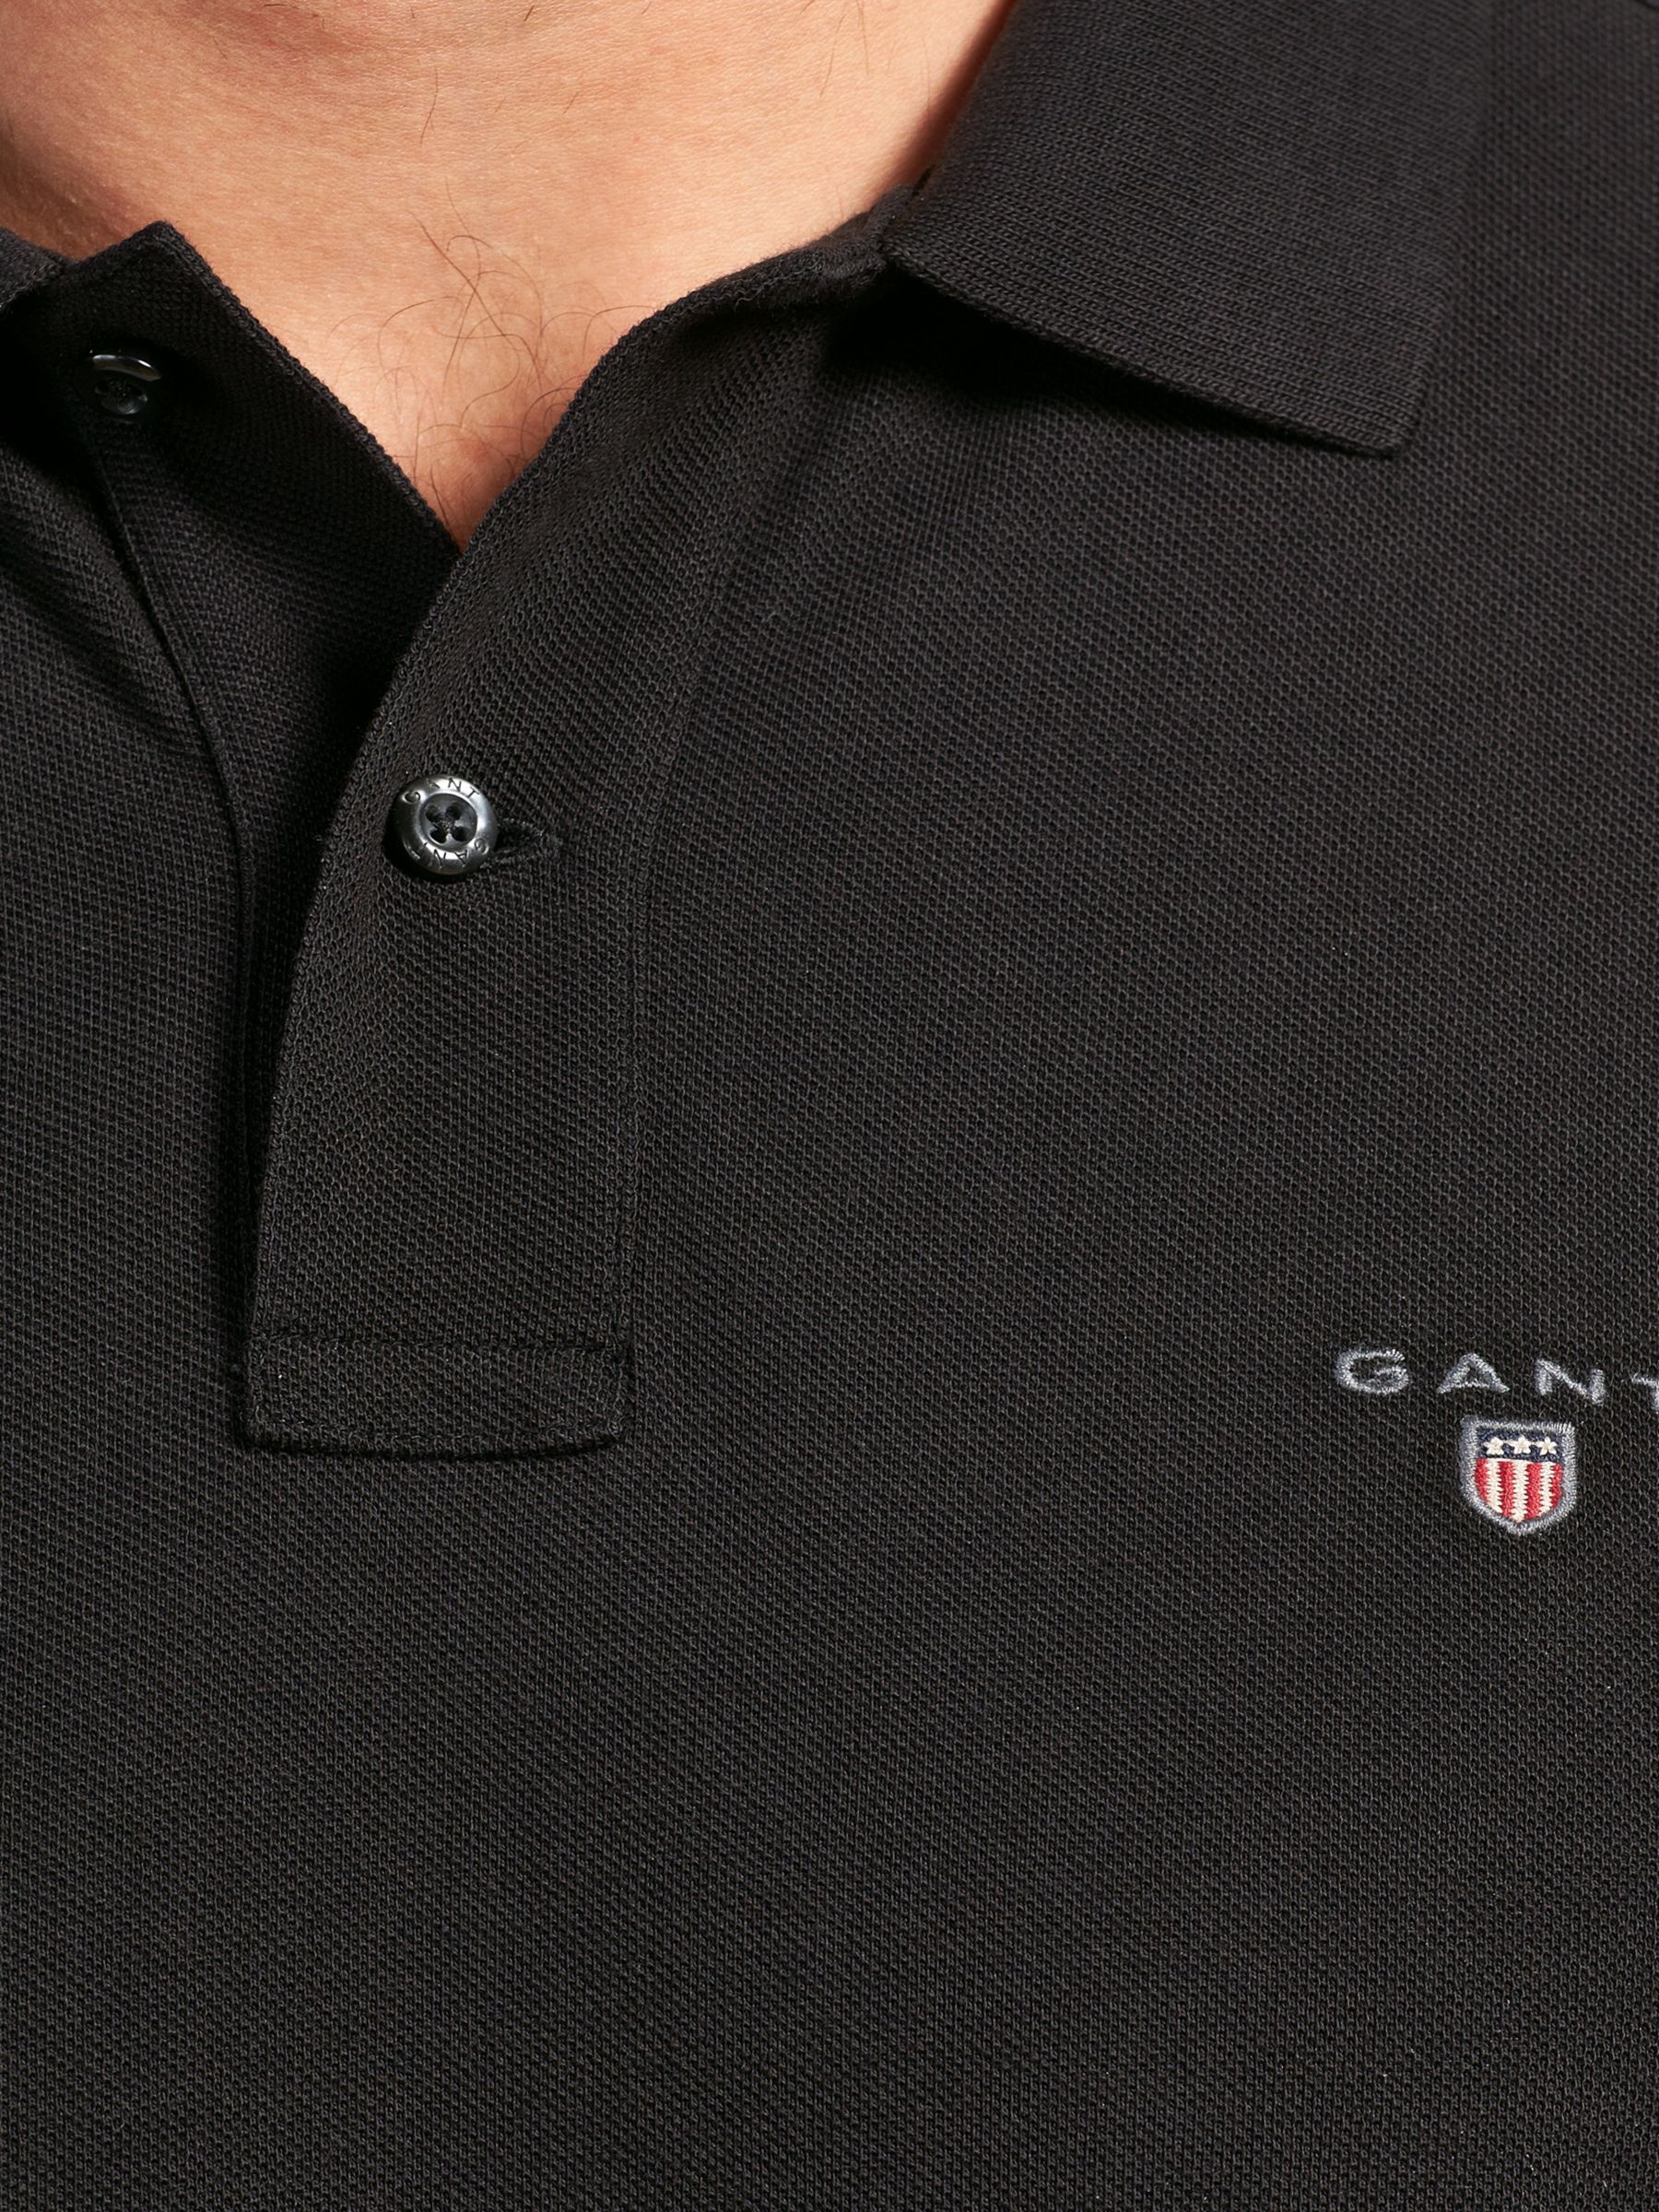 GANT Solid Pique Polo Shirt, Black at John Lewis & Partners